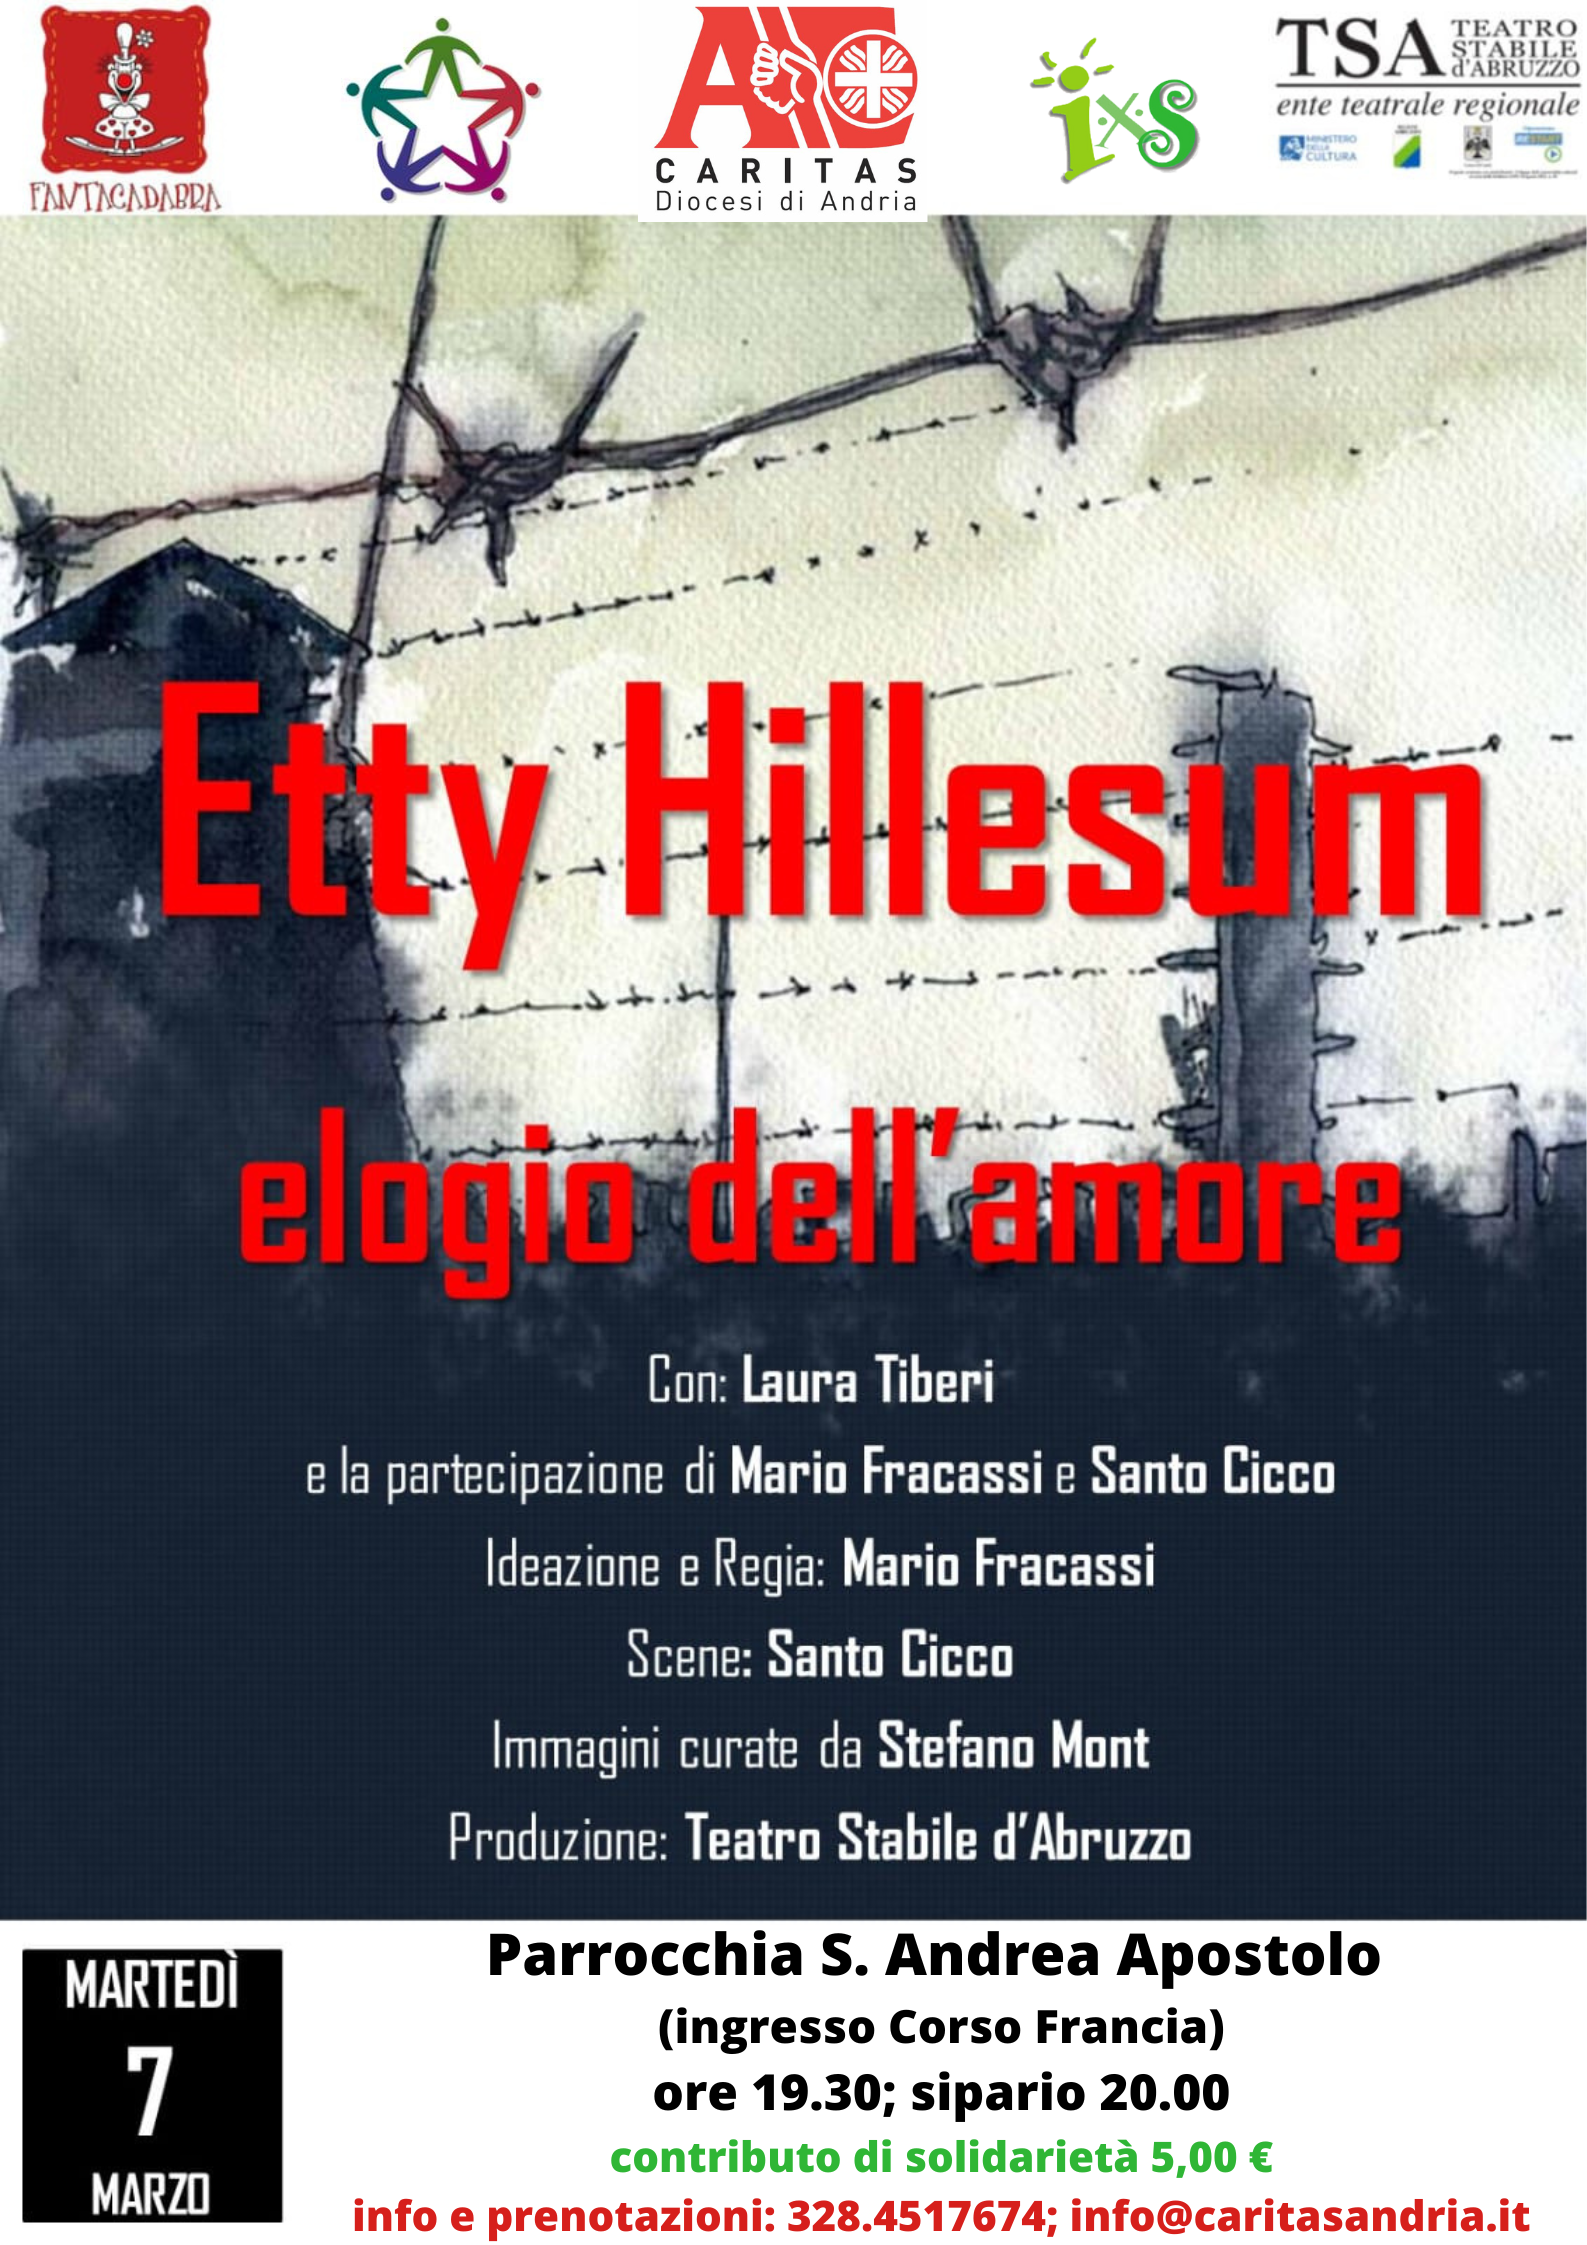 Etty Hillesum S. Andrea